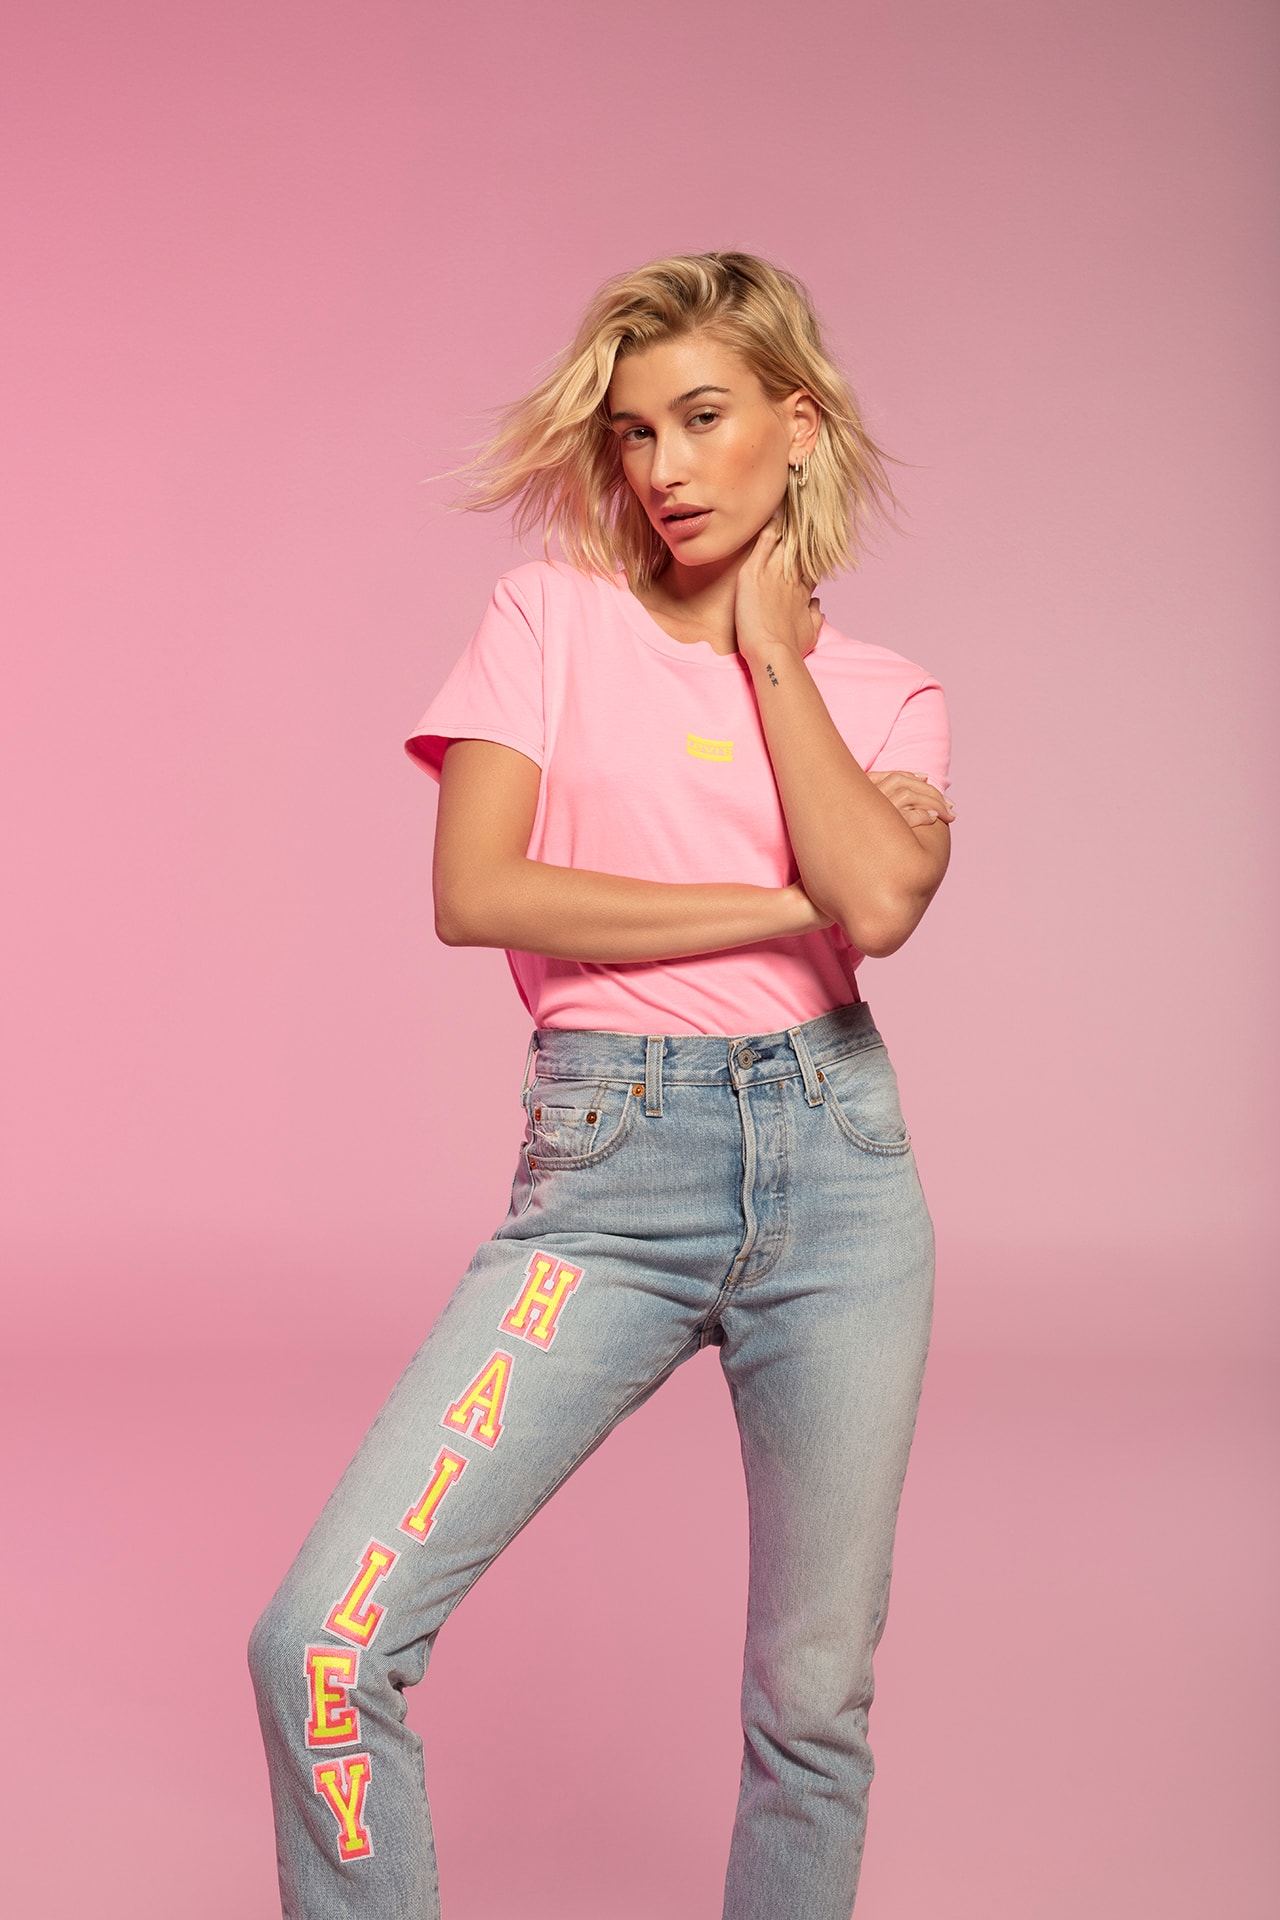 Hailey Baldwin Bieber Levi's 501 Campaign Pink T-Shirt Logo Jeans Denim DIY Customization Customized Patches